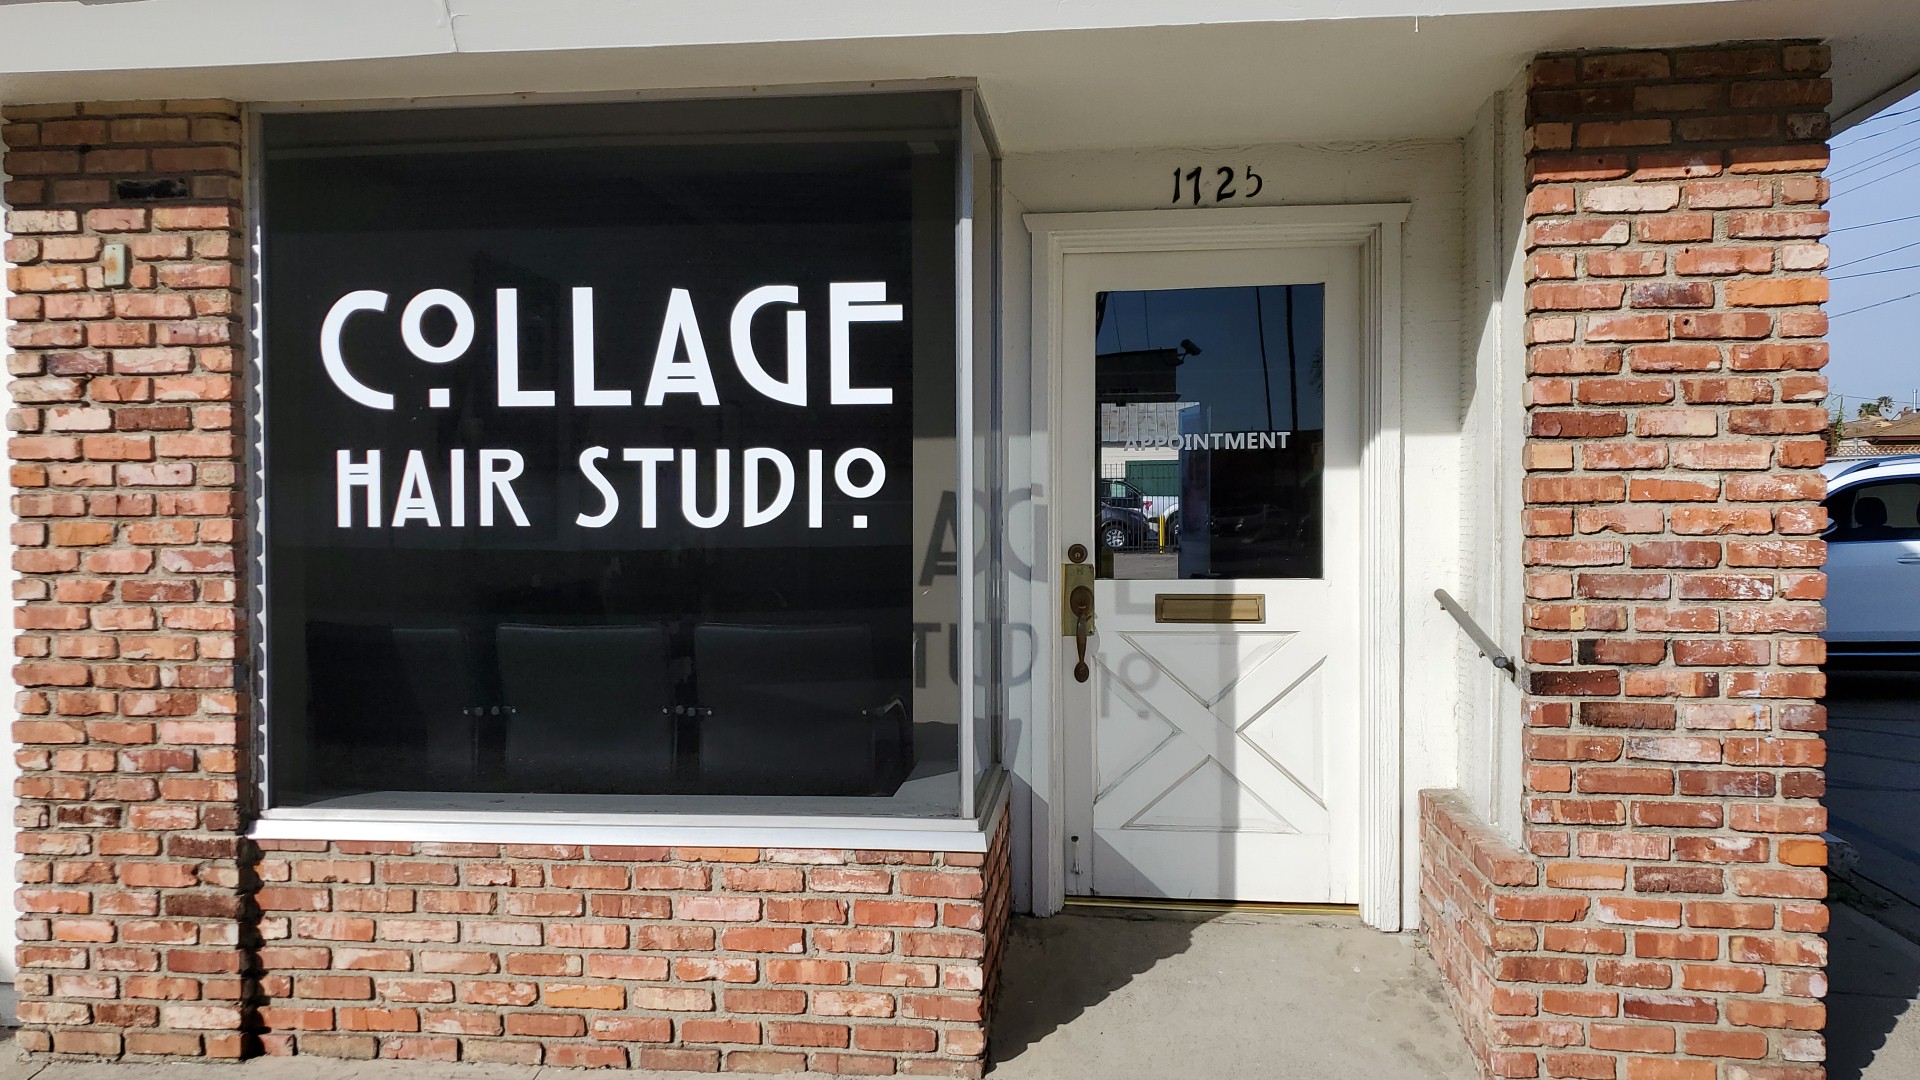 Collage Hair Studio